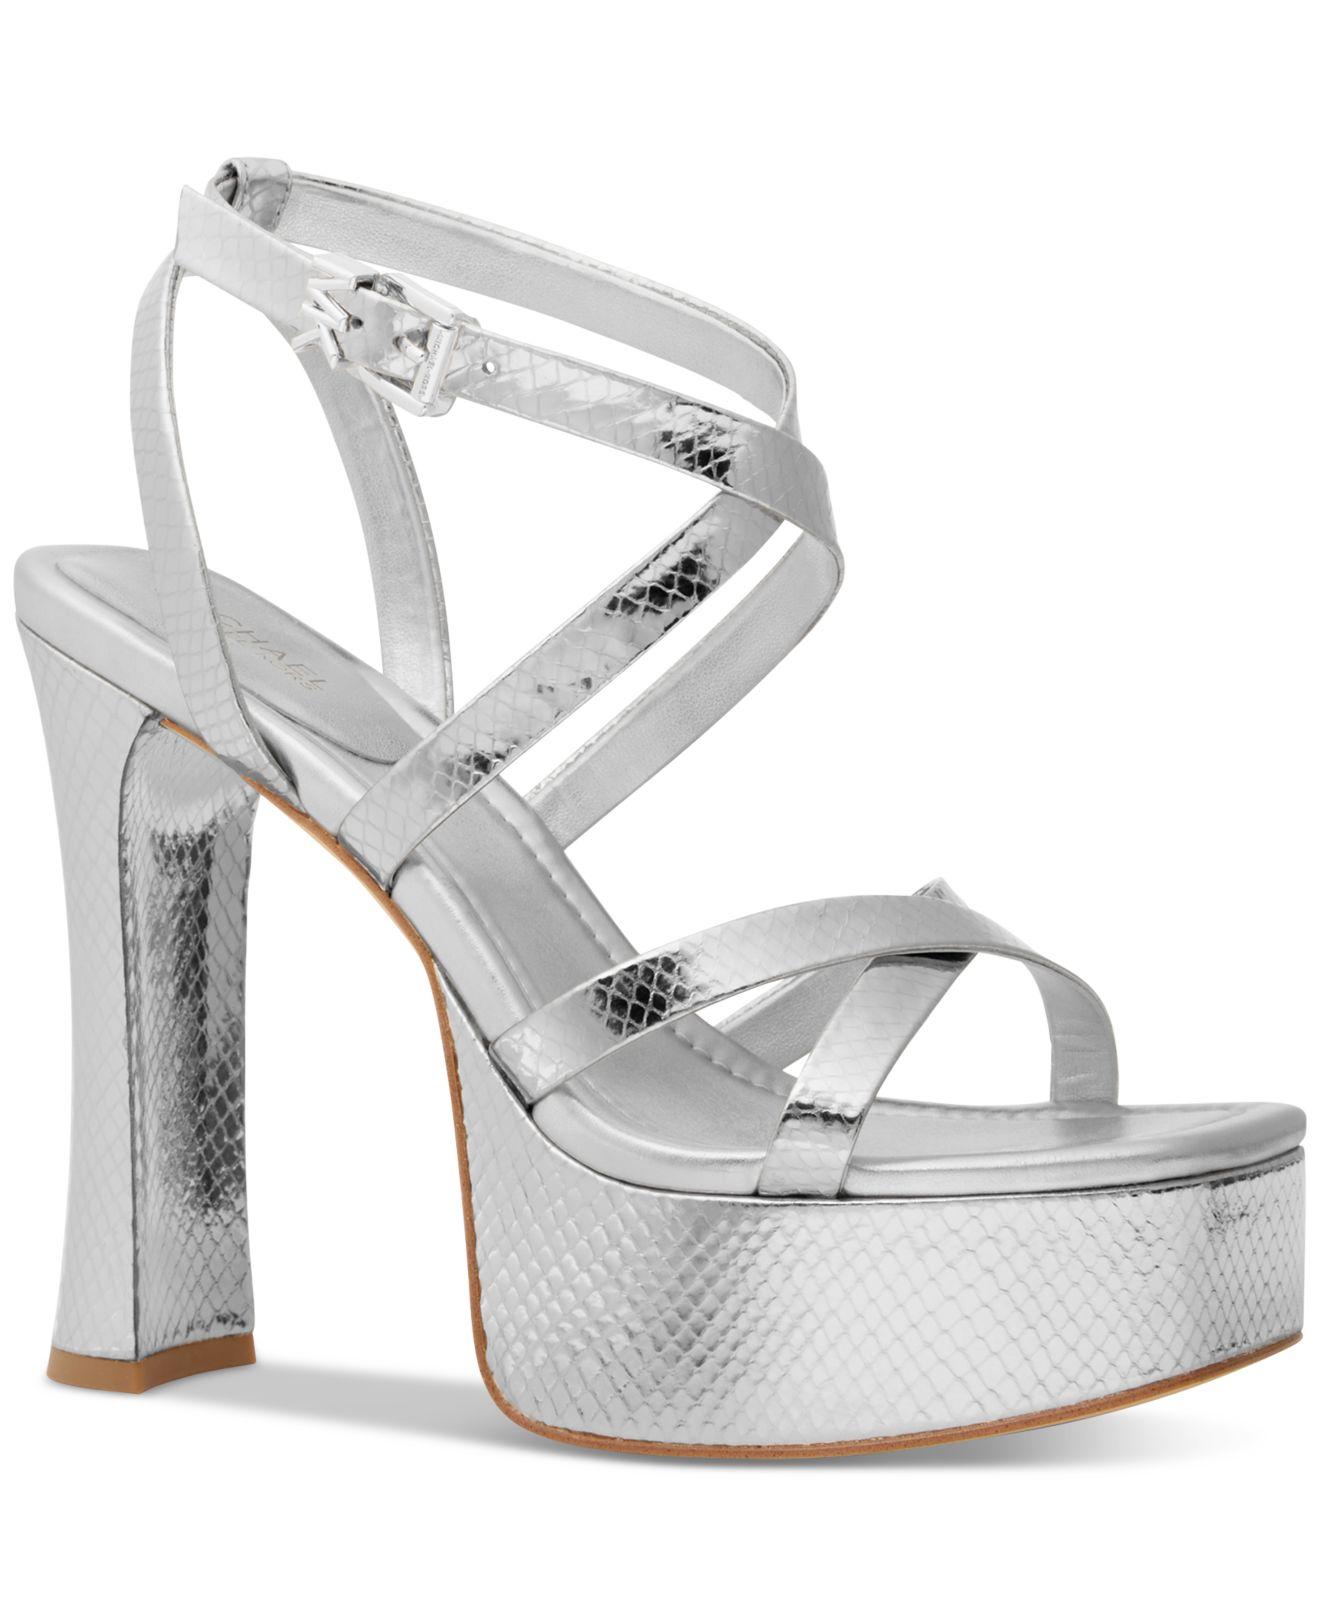 Michael Kors  Shoes  Michael Kors Summer Platform Dress Sandals Light  Sage 55  Poshmark